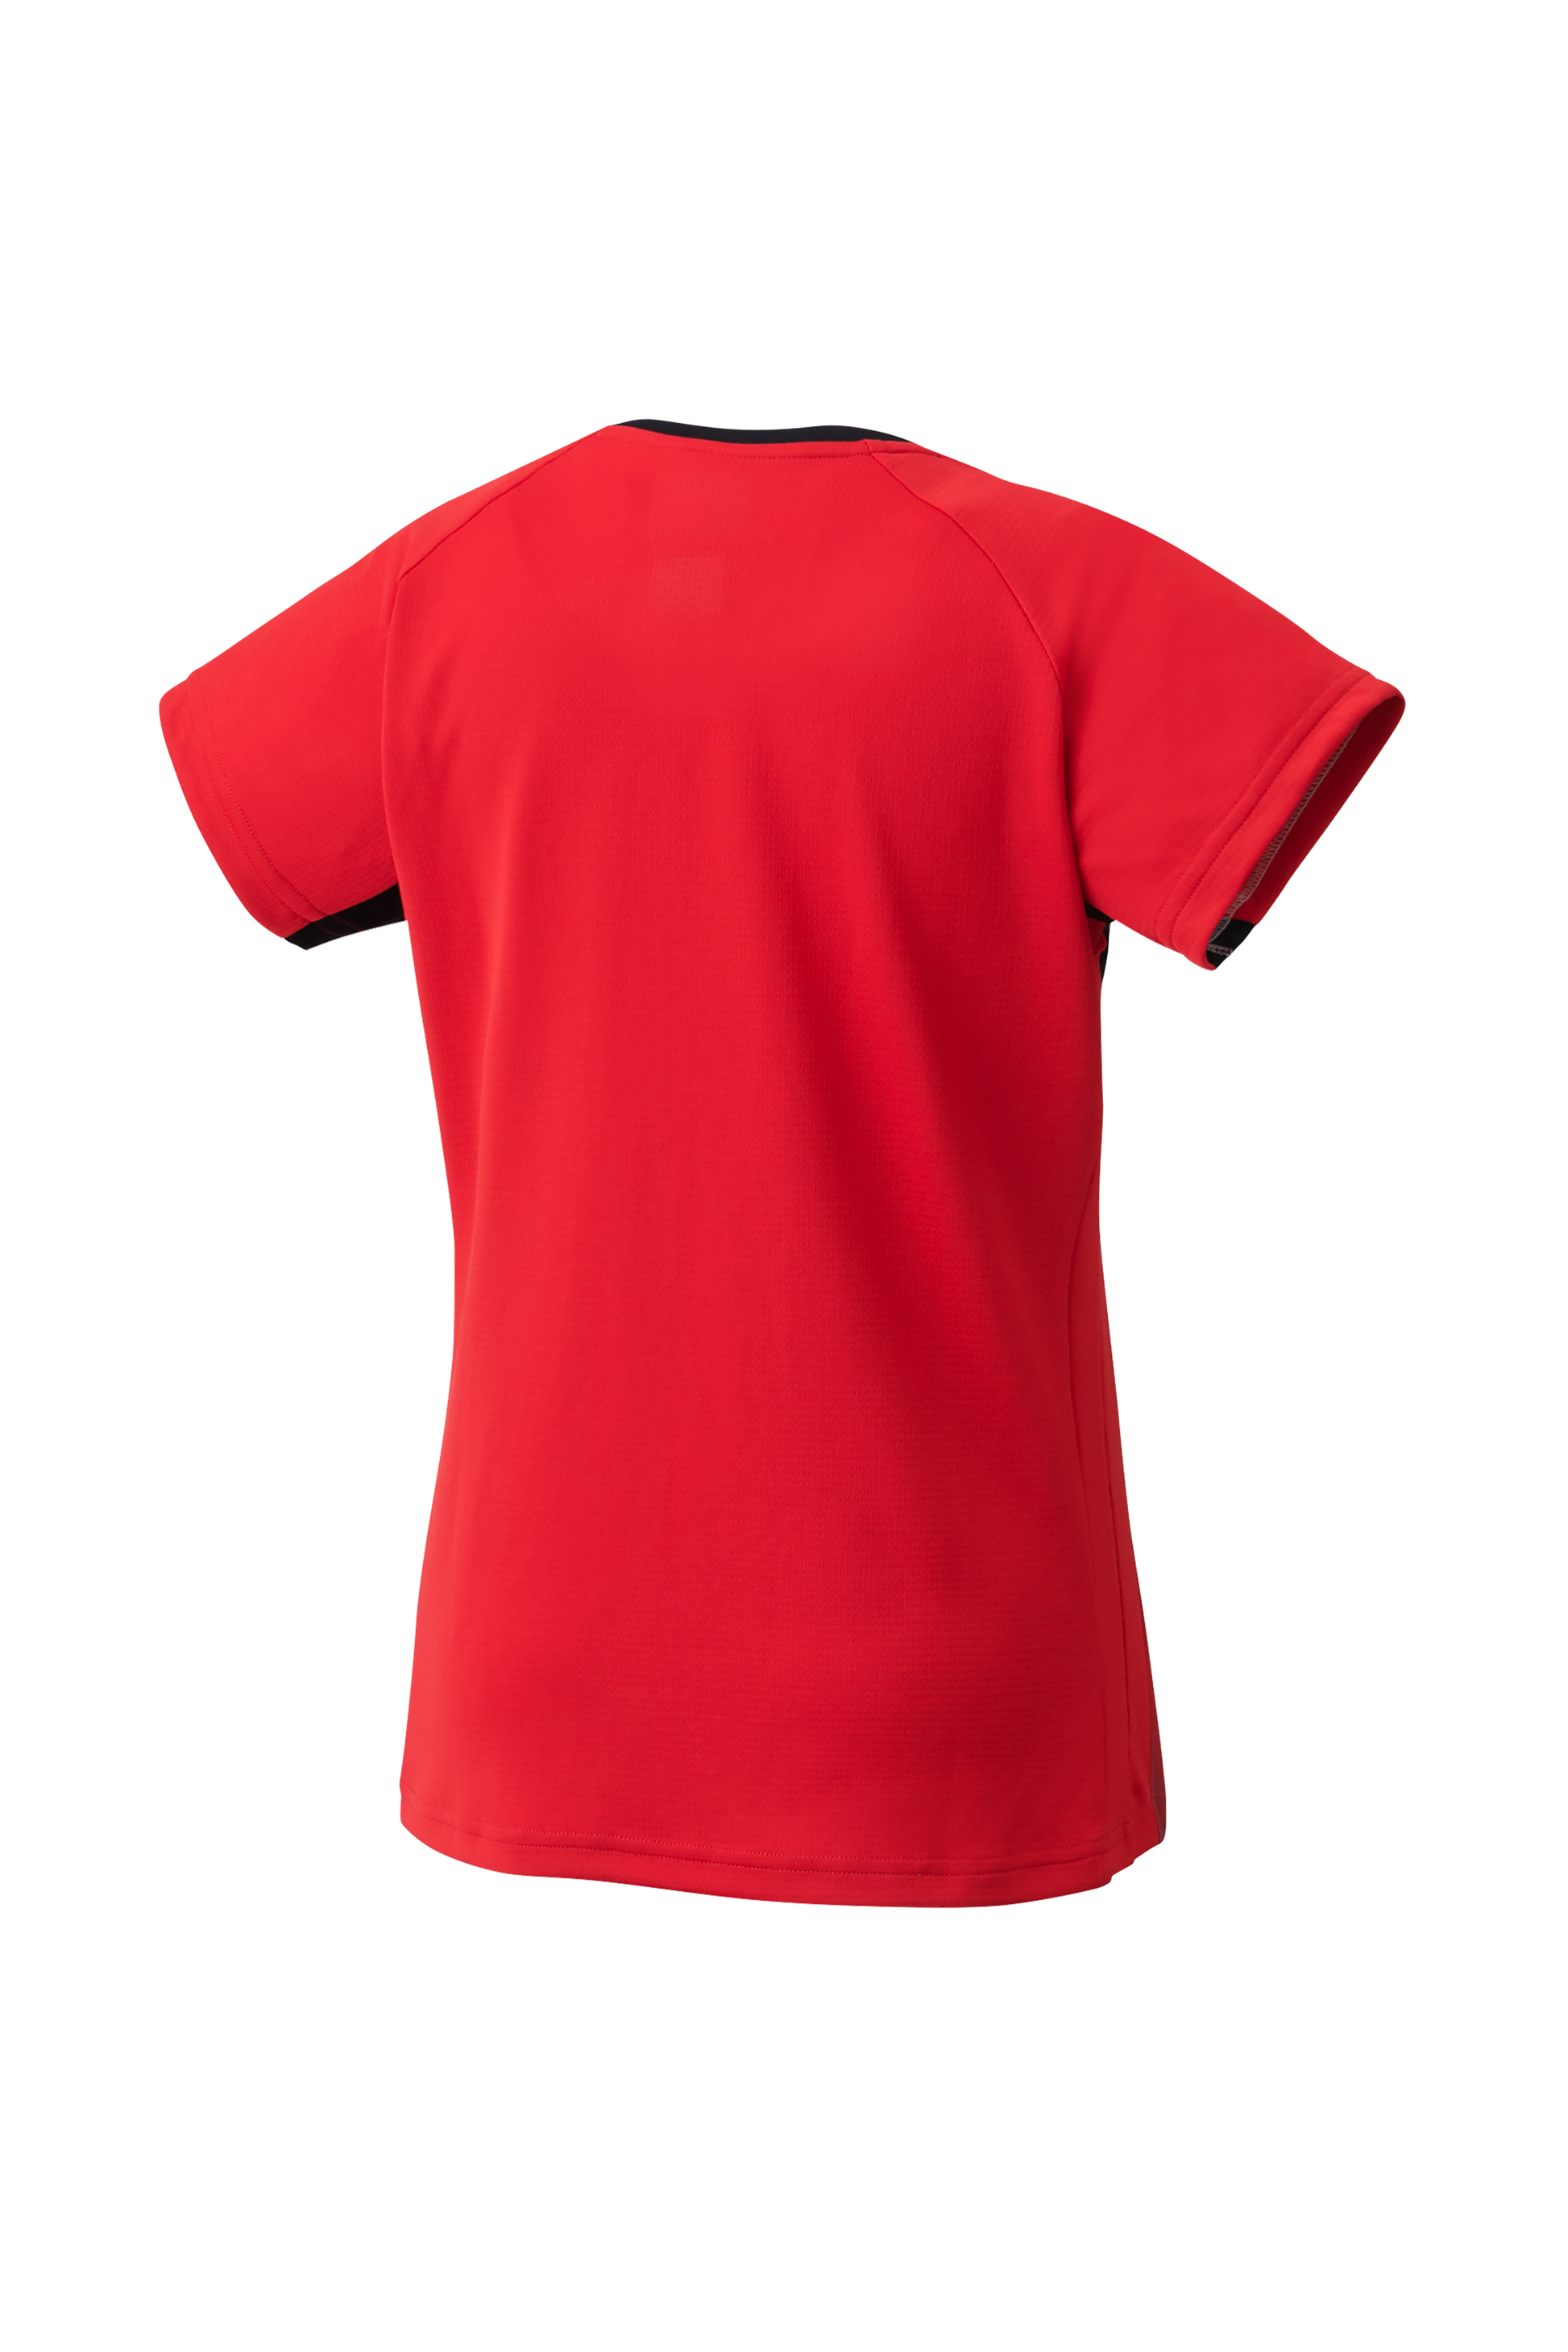 YONEX Lady's Crew Neck Shirt 20641 [Tornado Red] - Max Sports